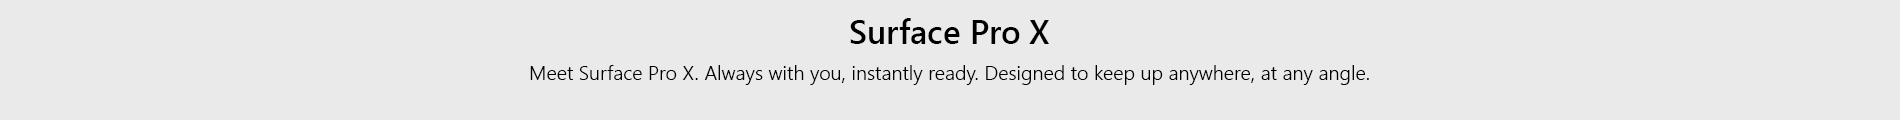 Microsoft Surface Header Landing Page 09.27.21 Tile 01